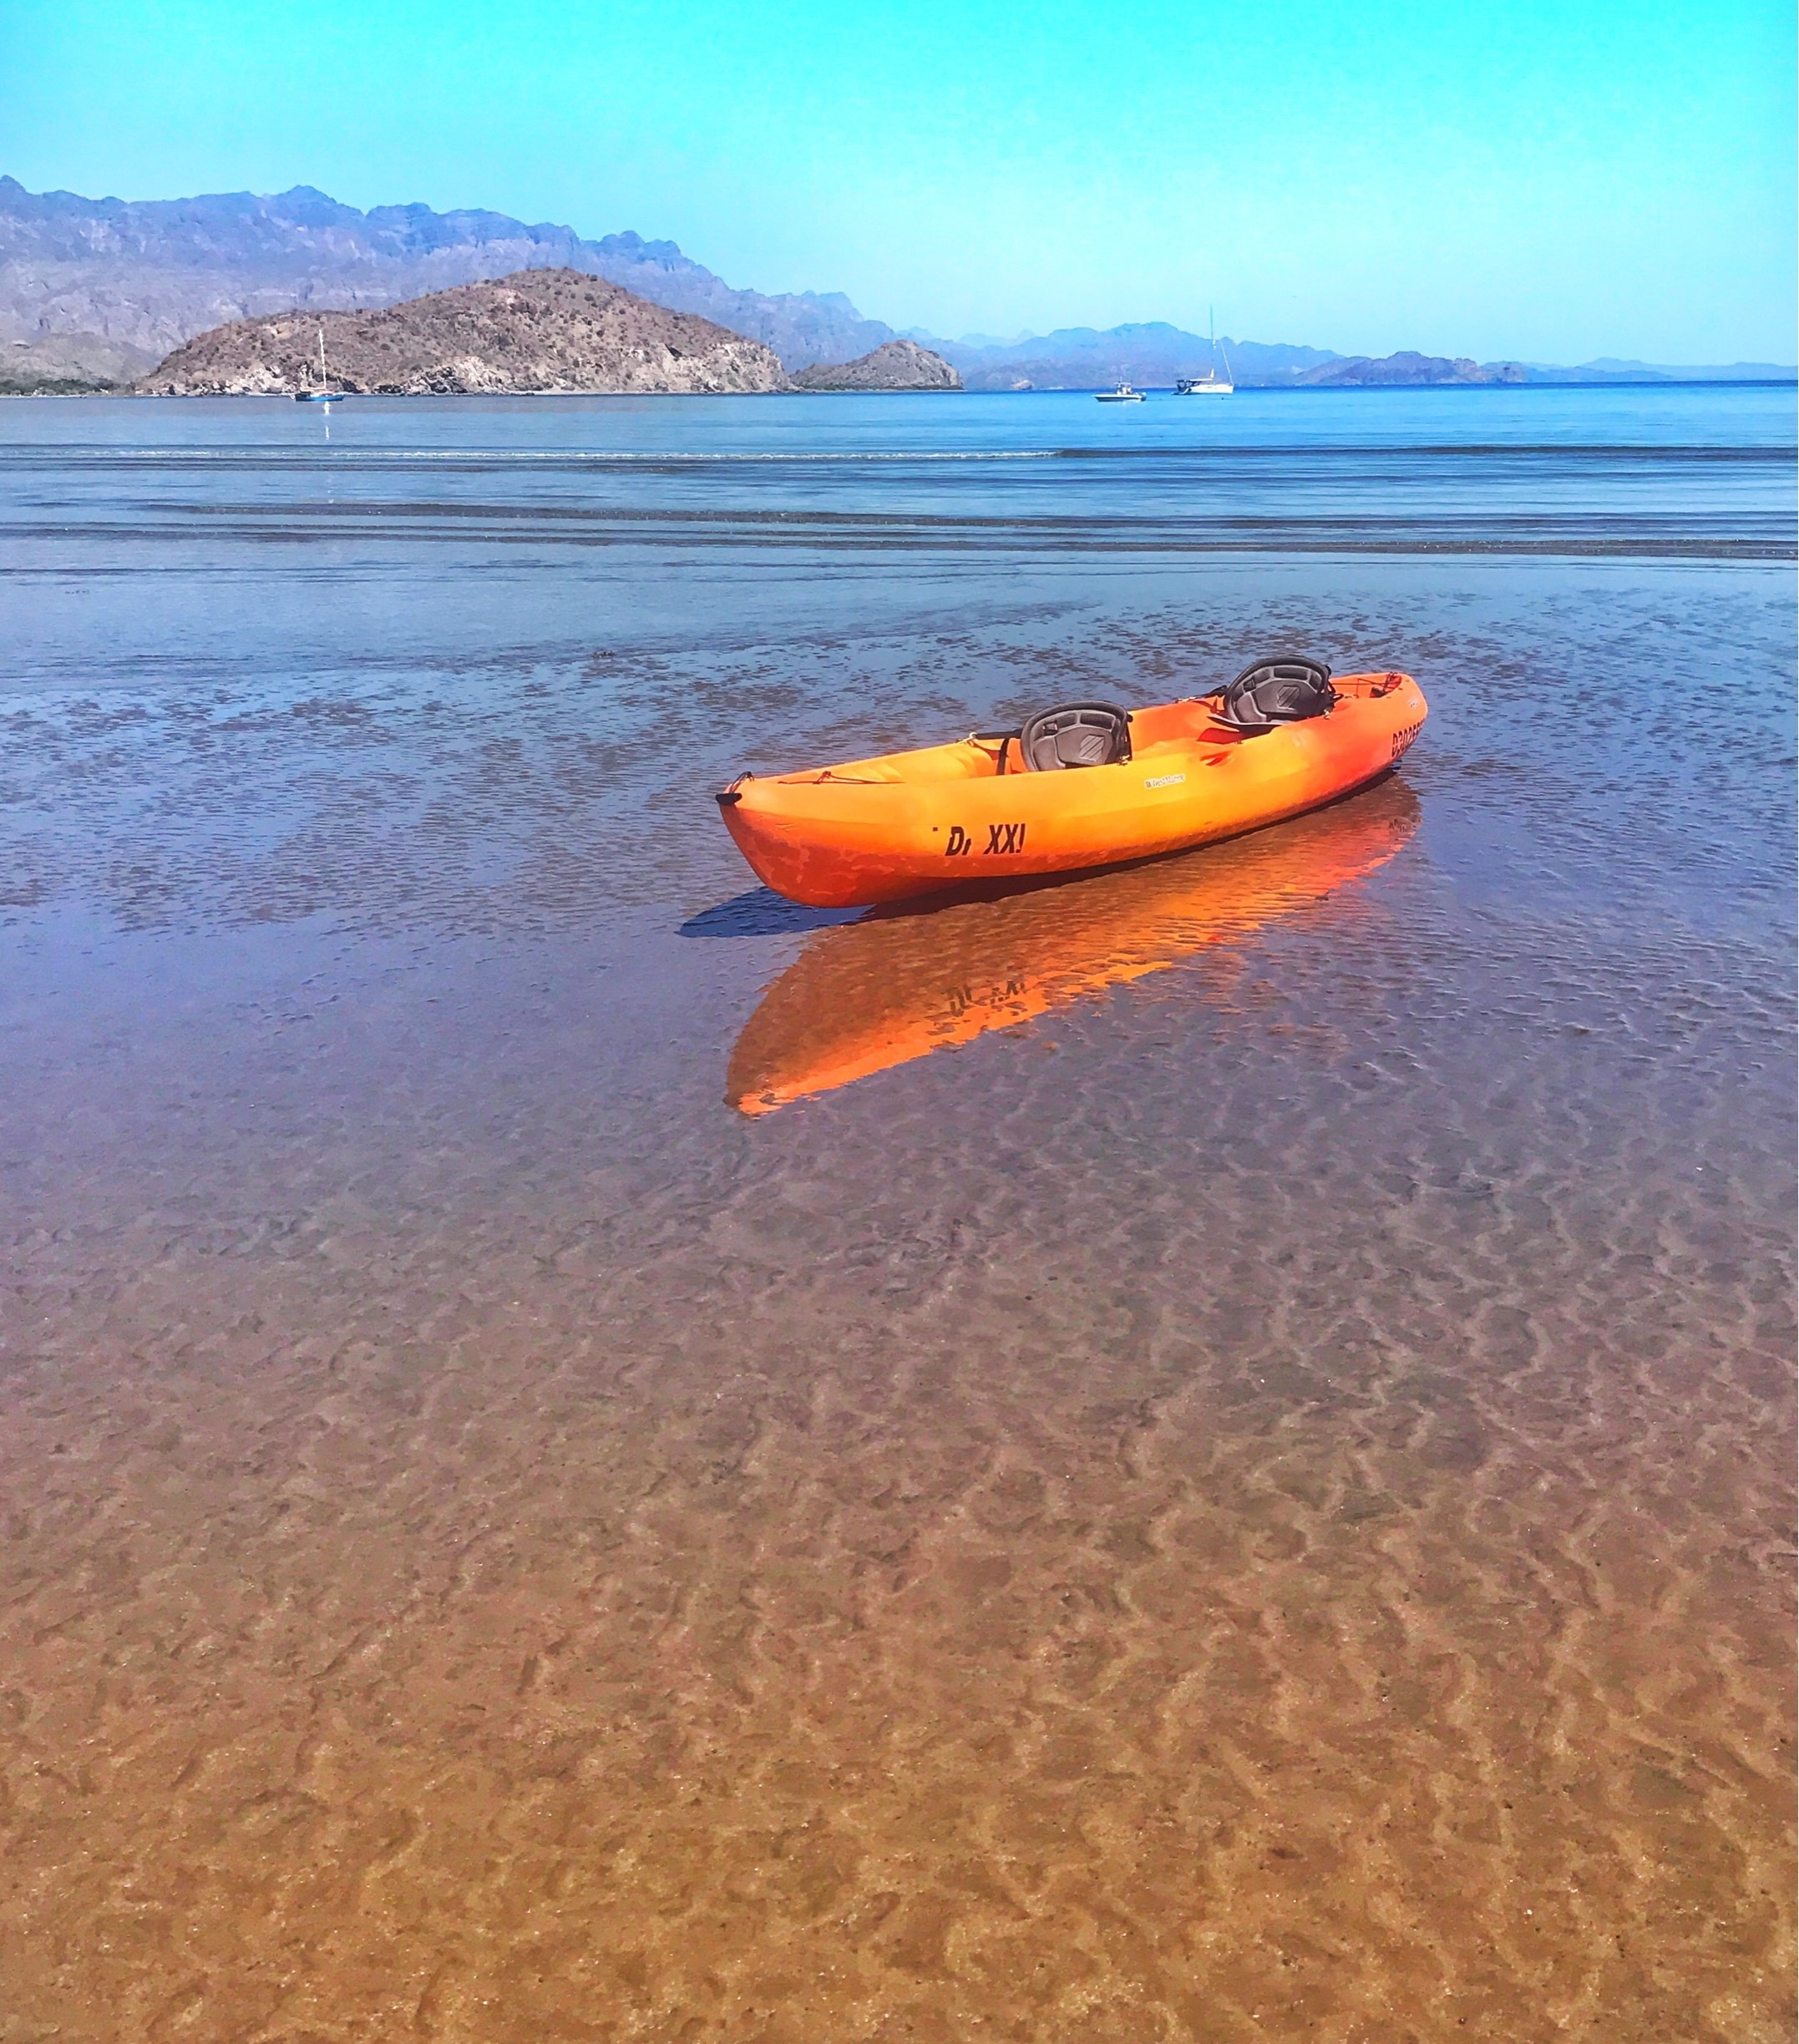 My idea of #springfun
Kayaking in Baja sur. Beautiful scenery.